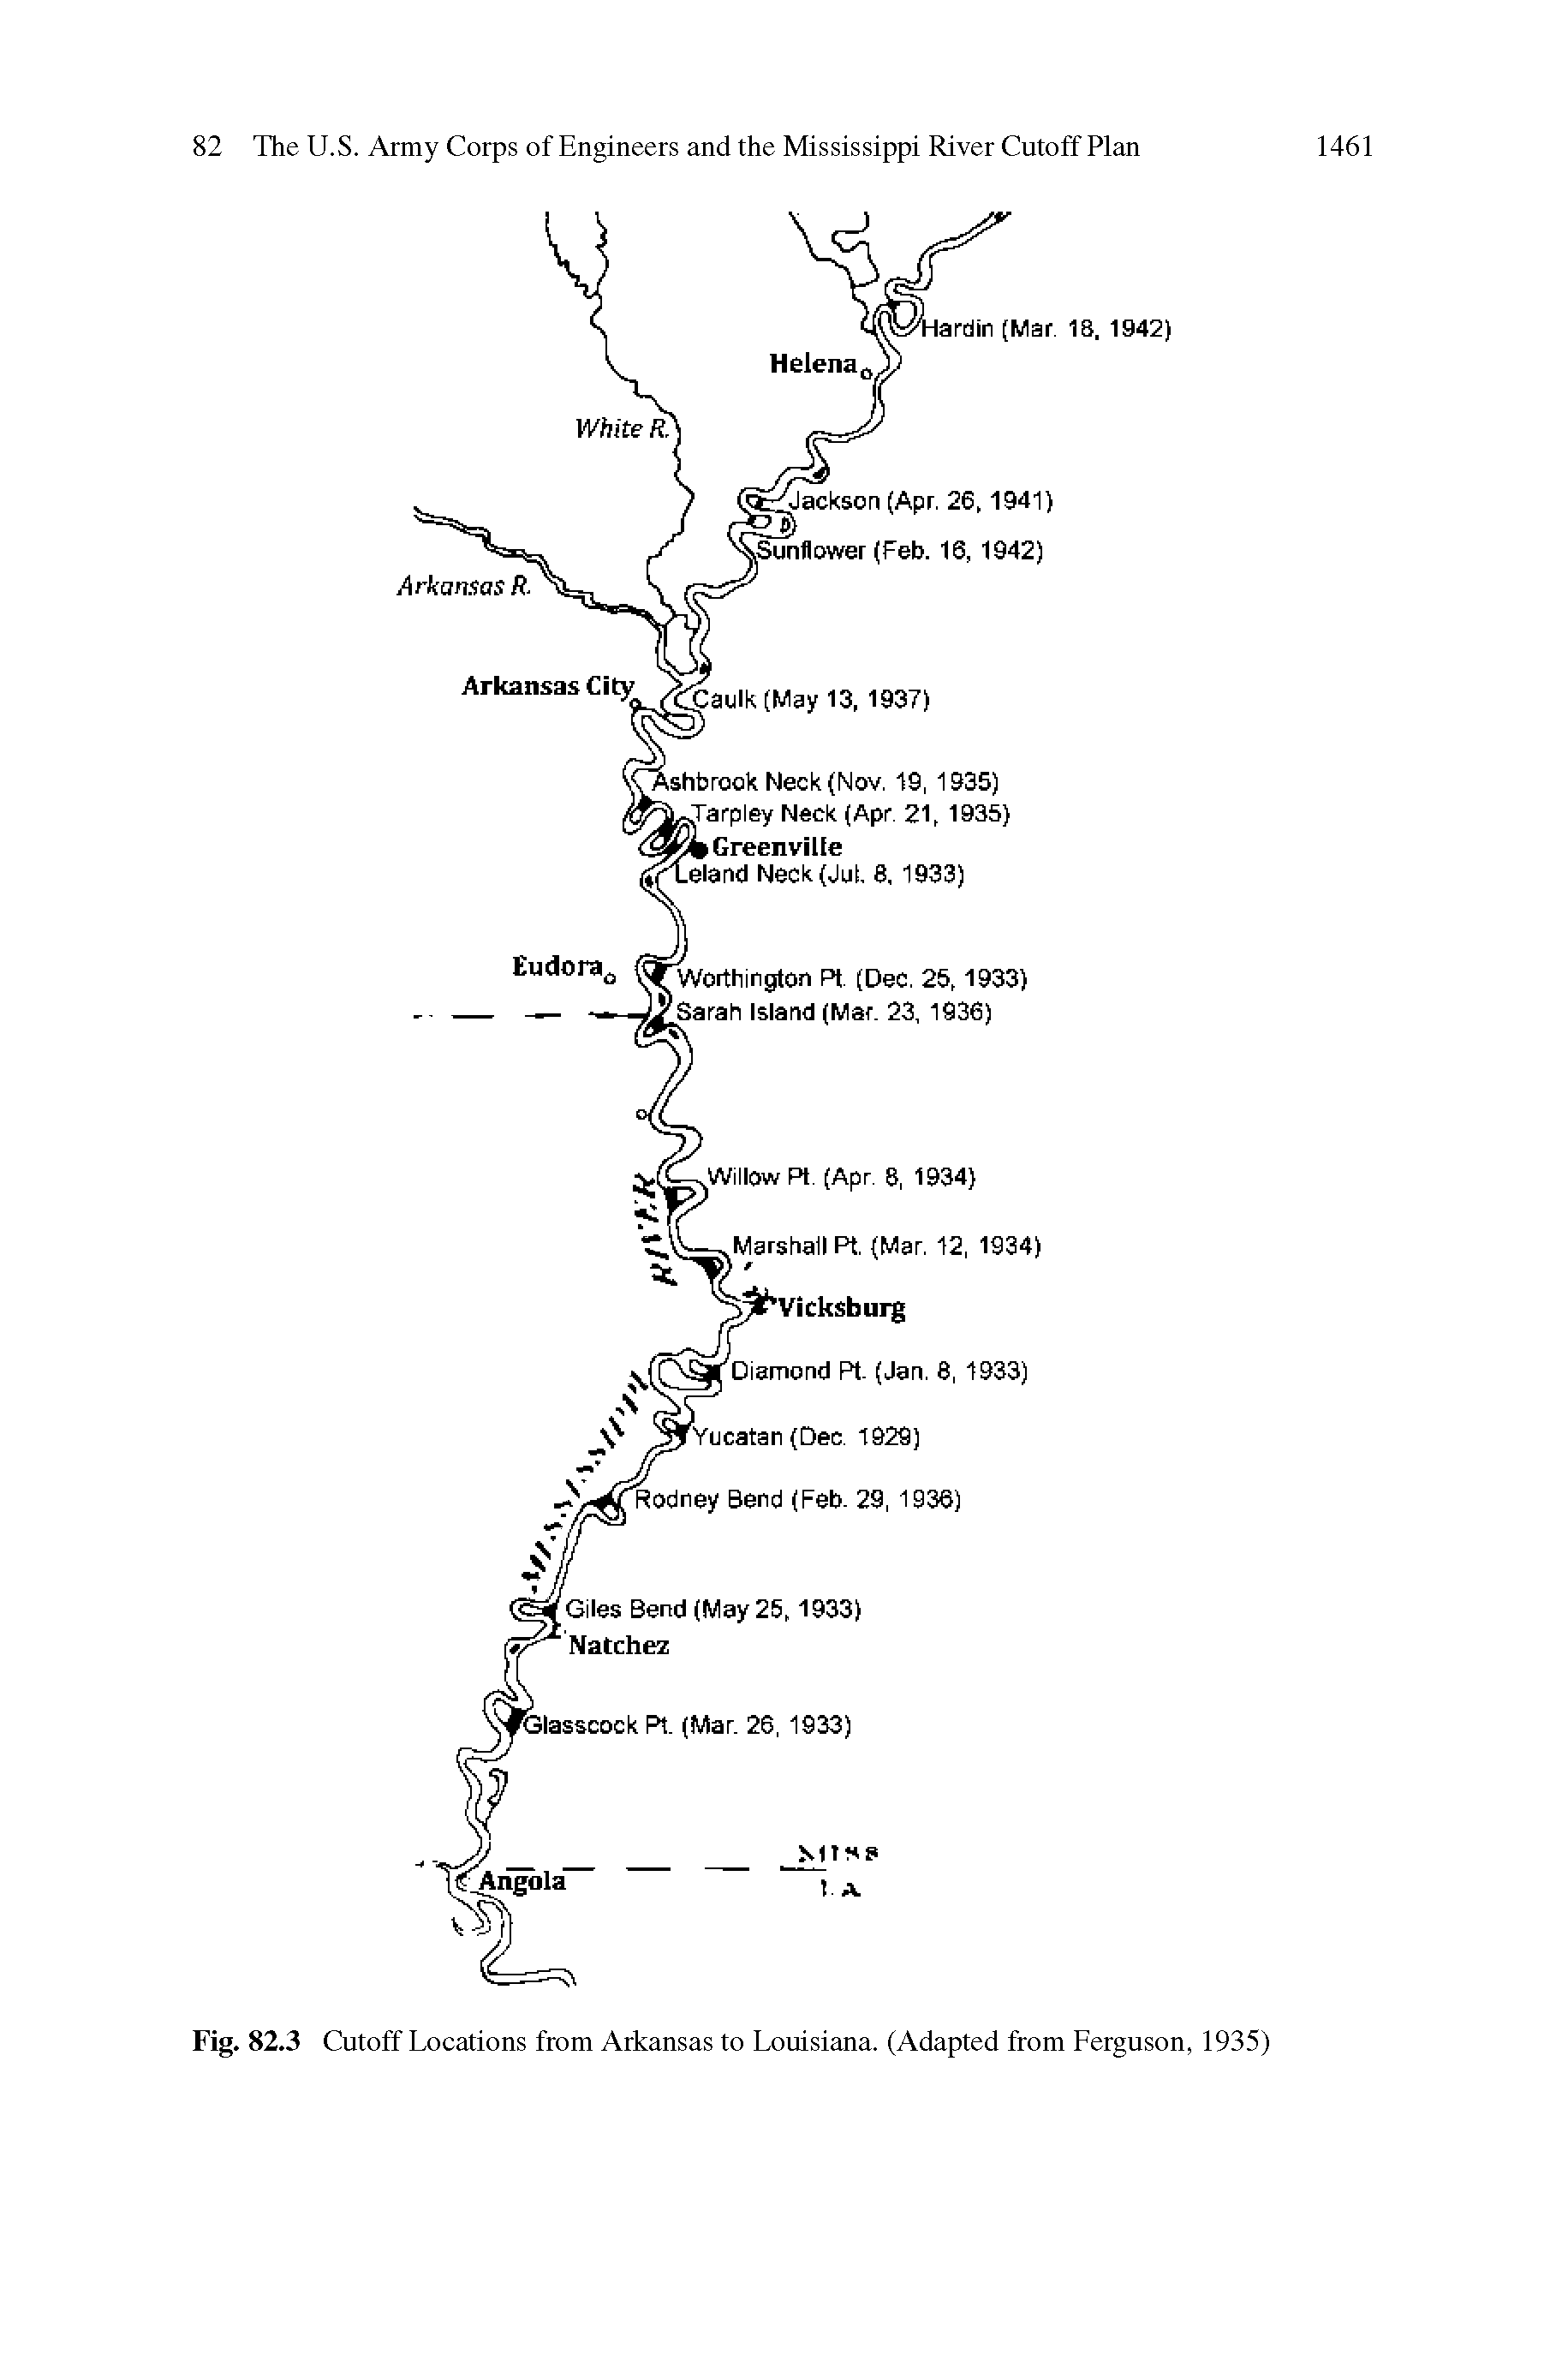 Fig. 82.3 Cutoff Locations from Arkansas to Louisiana. (Adapted from Lerguson, 1935)...